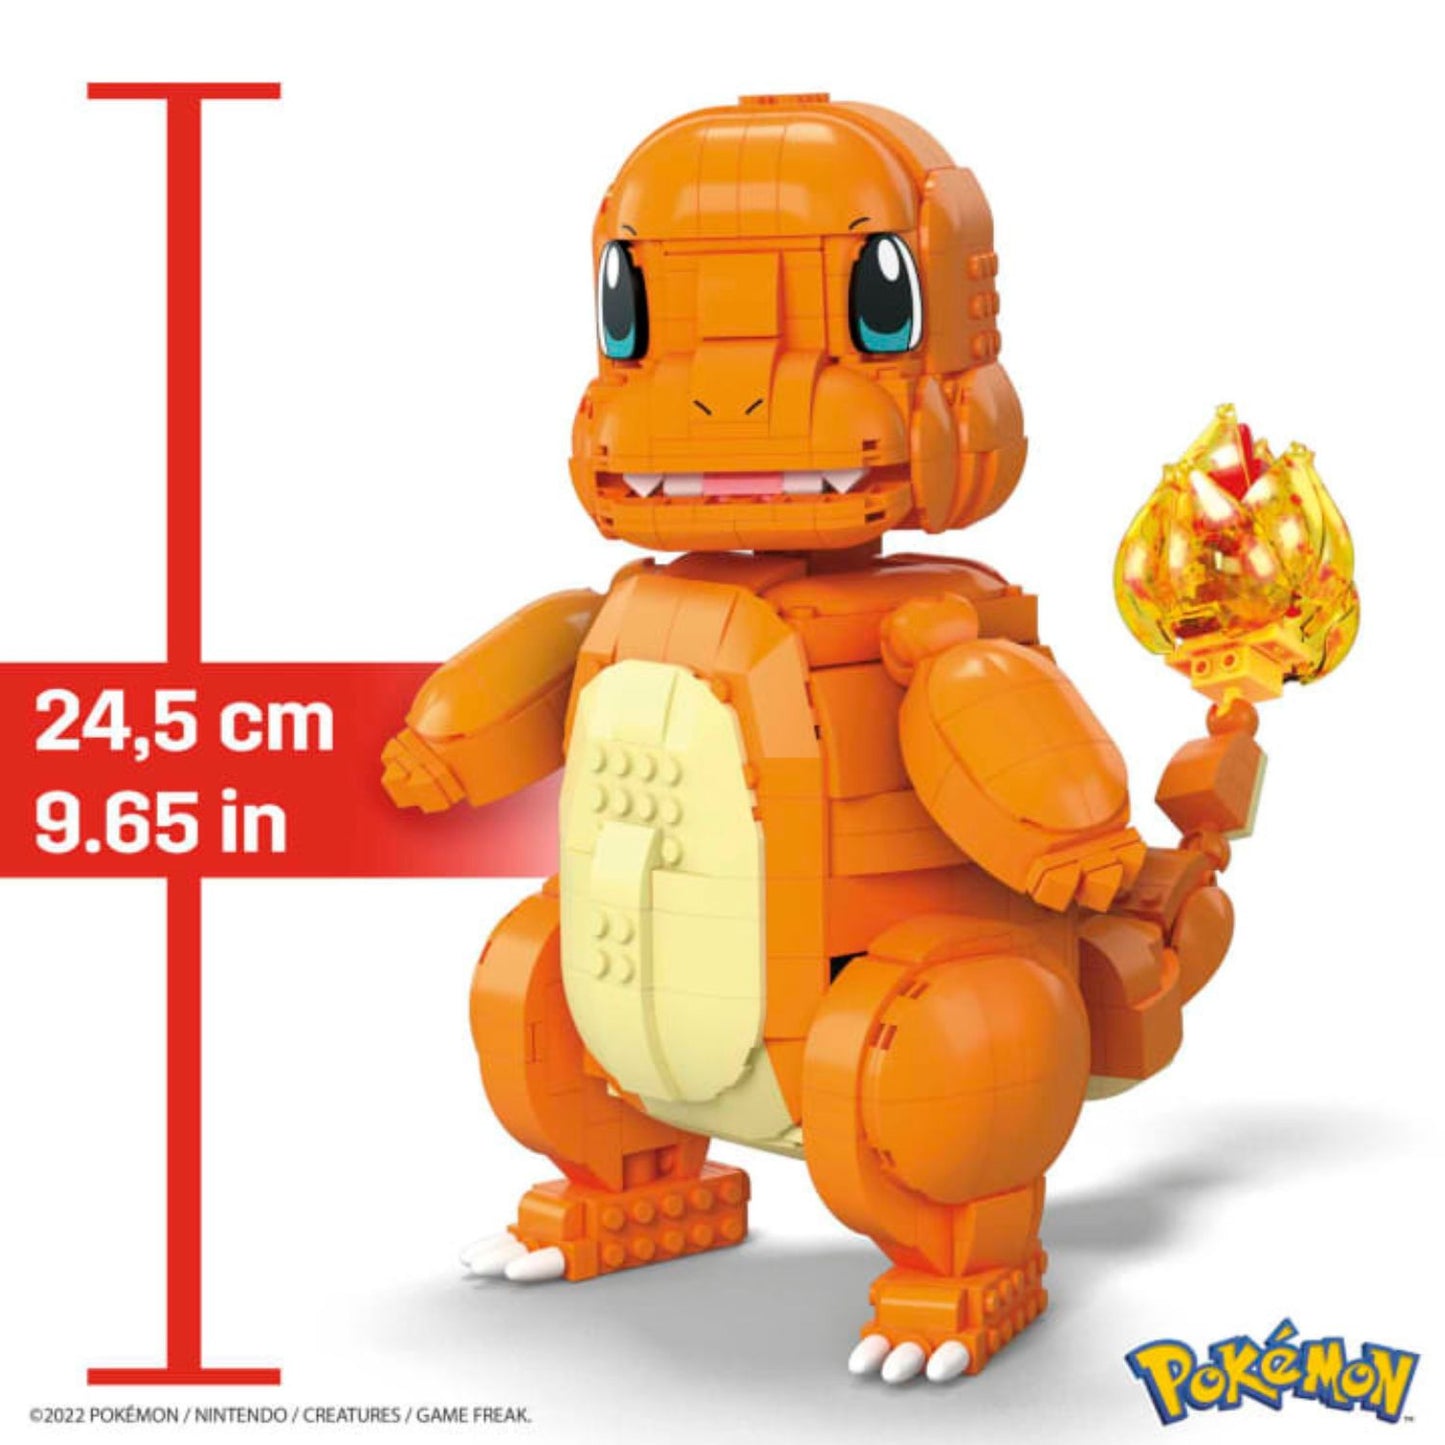 Mattel - Mega Bloks Pokémon Charmander Gigante HHL13